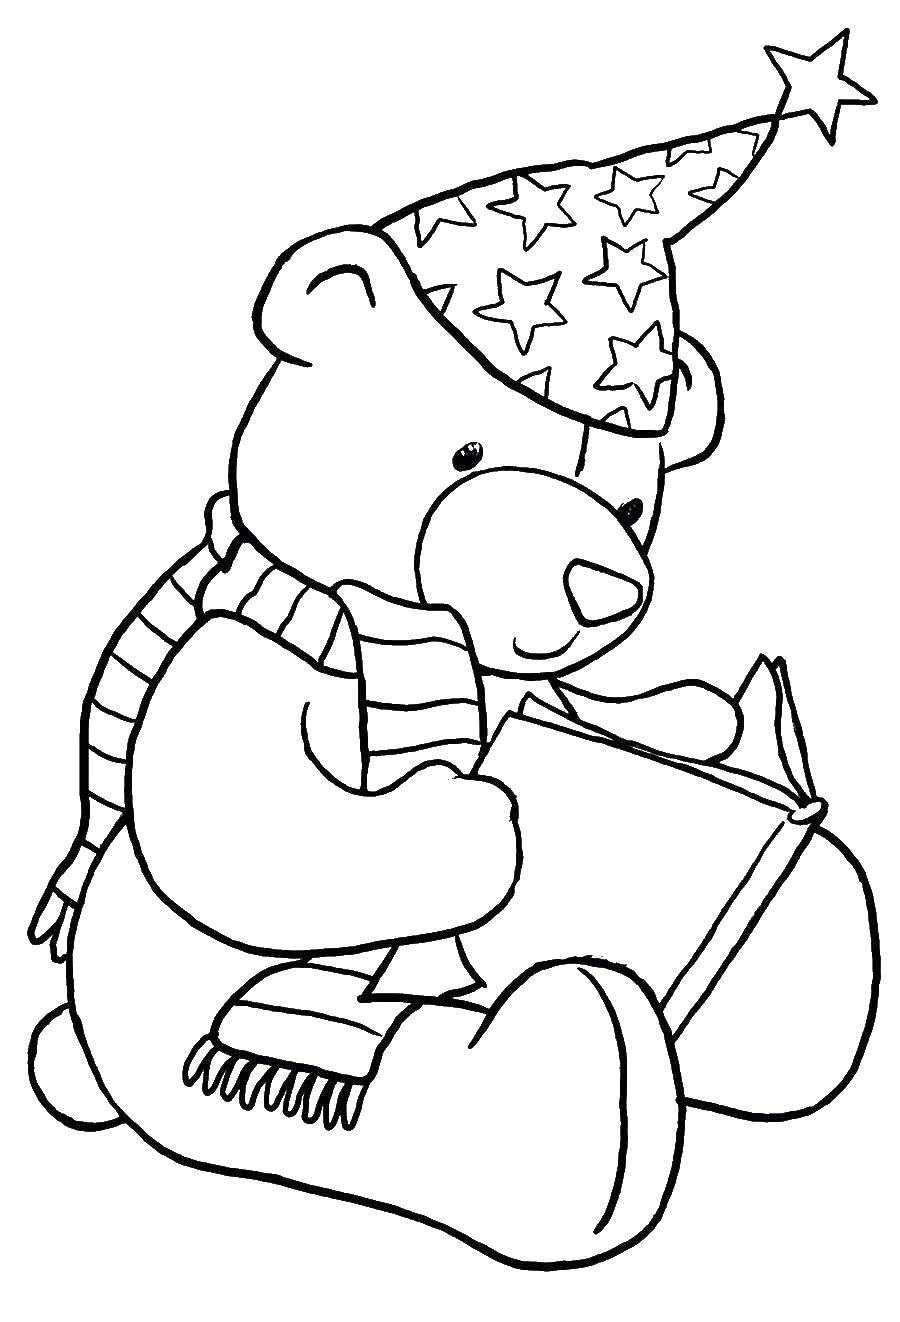 Название: Раскраска Мишка с книжкой. Категория: игрушка. Теги: Игрушка, медведь.